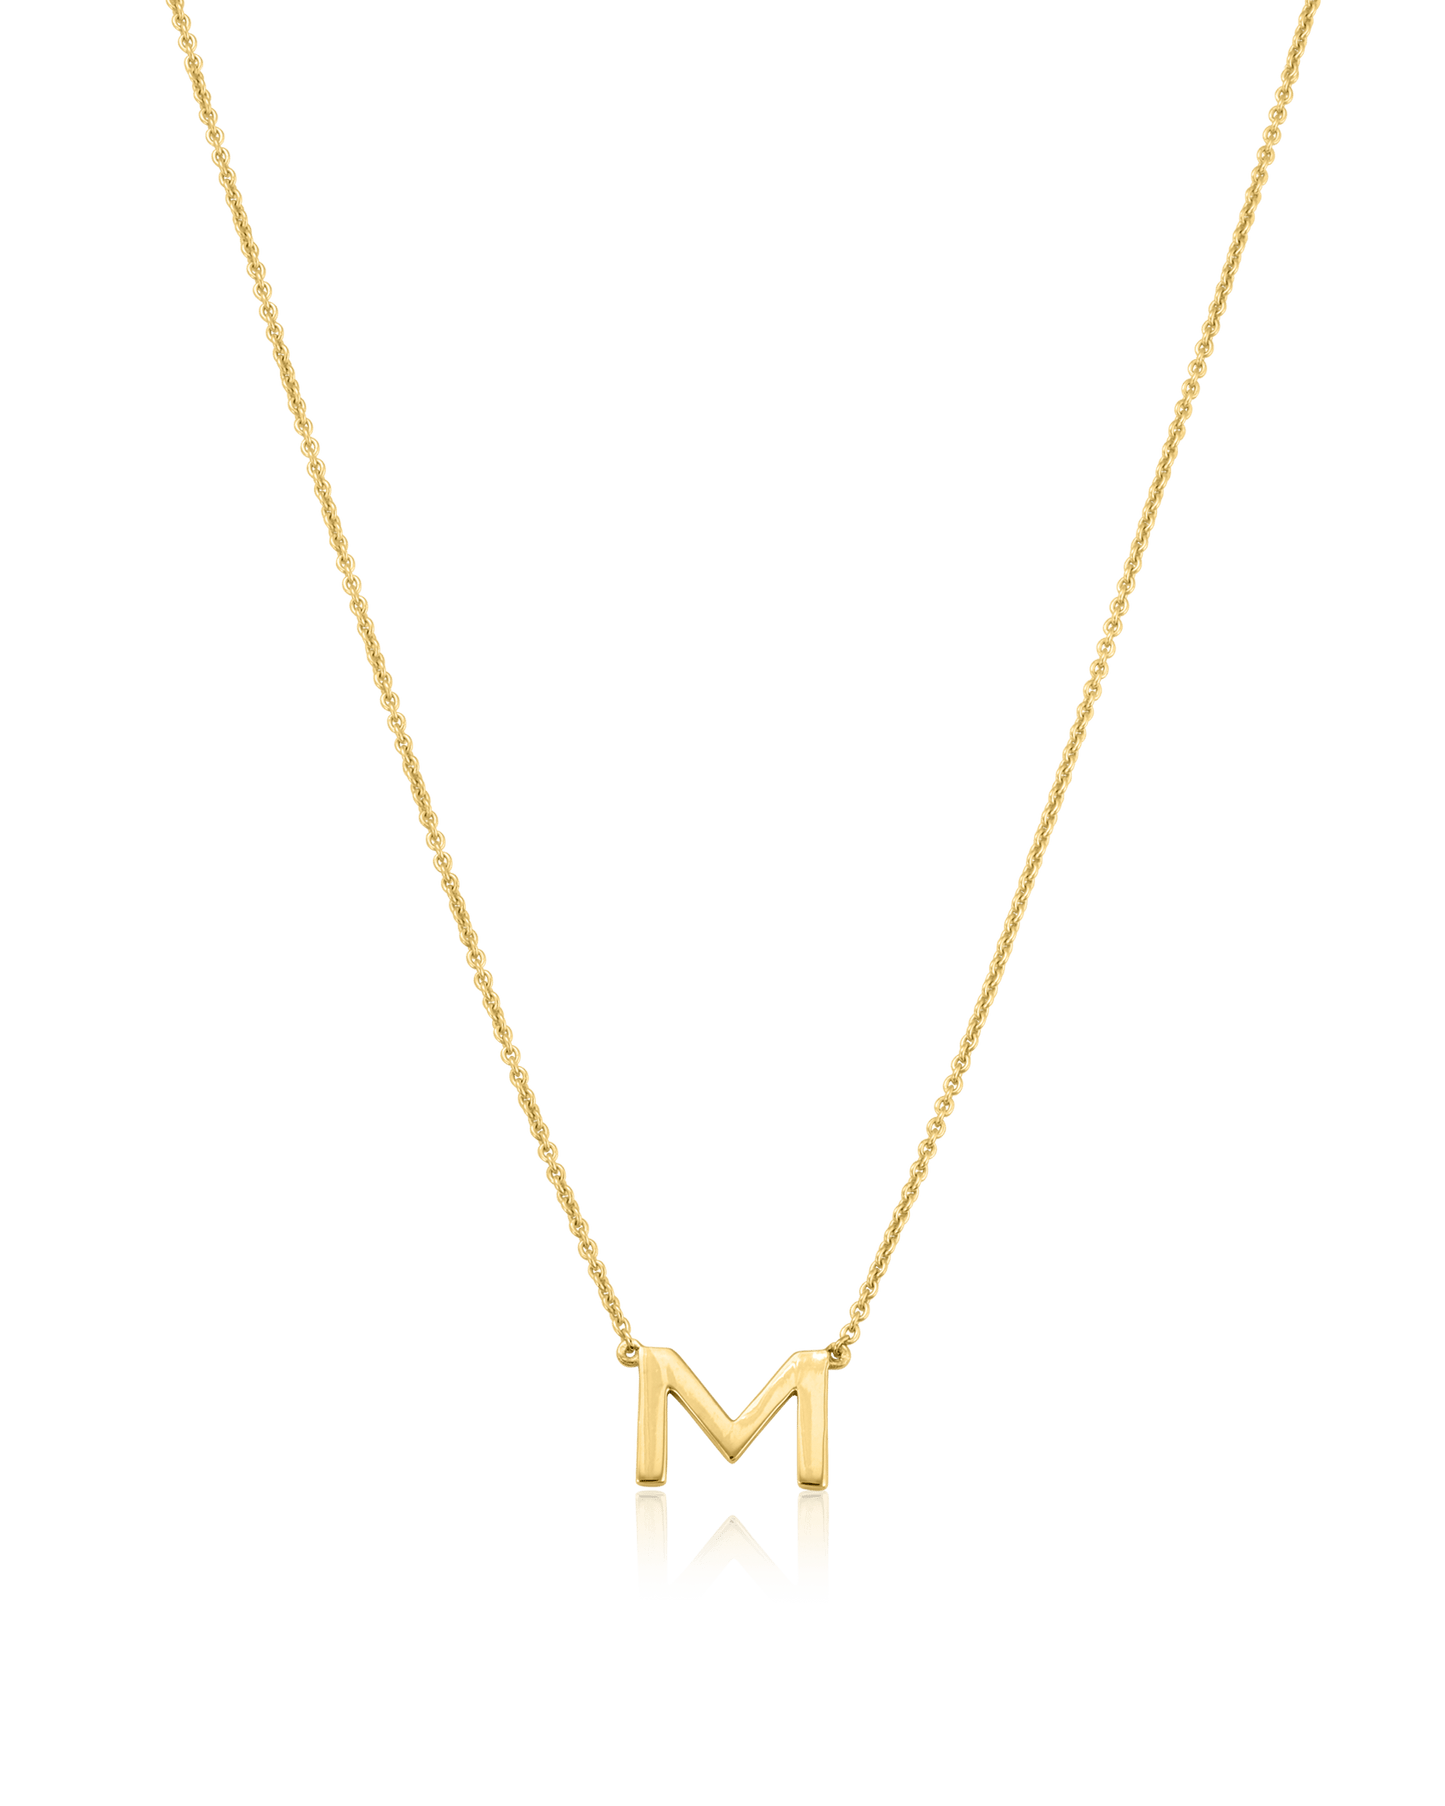 Immy Necklace - 18K Gold Vermeil Necklaces magal-dev 16”+2” extender 